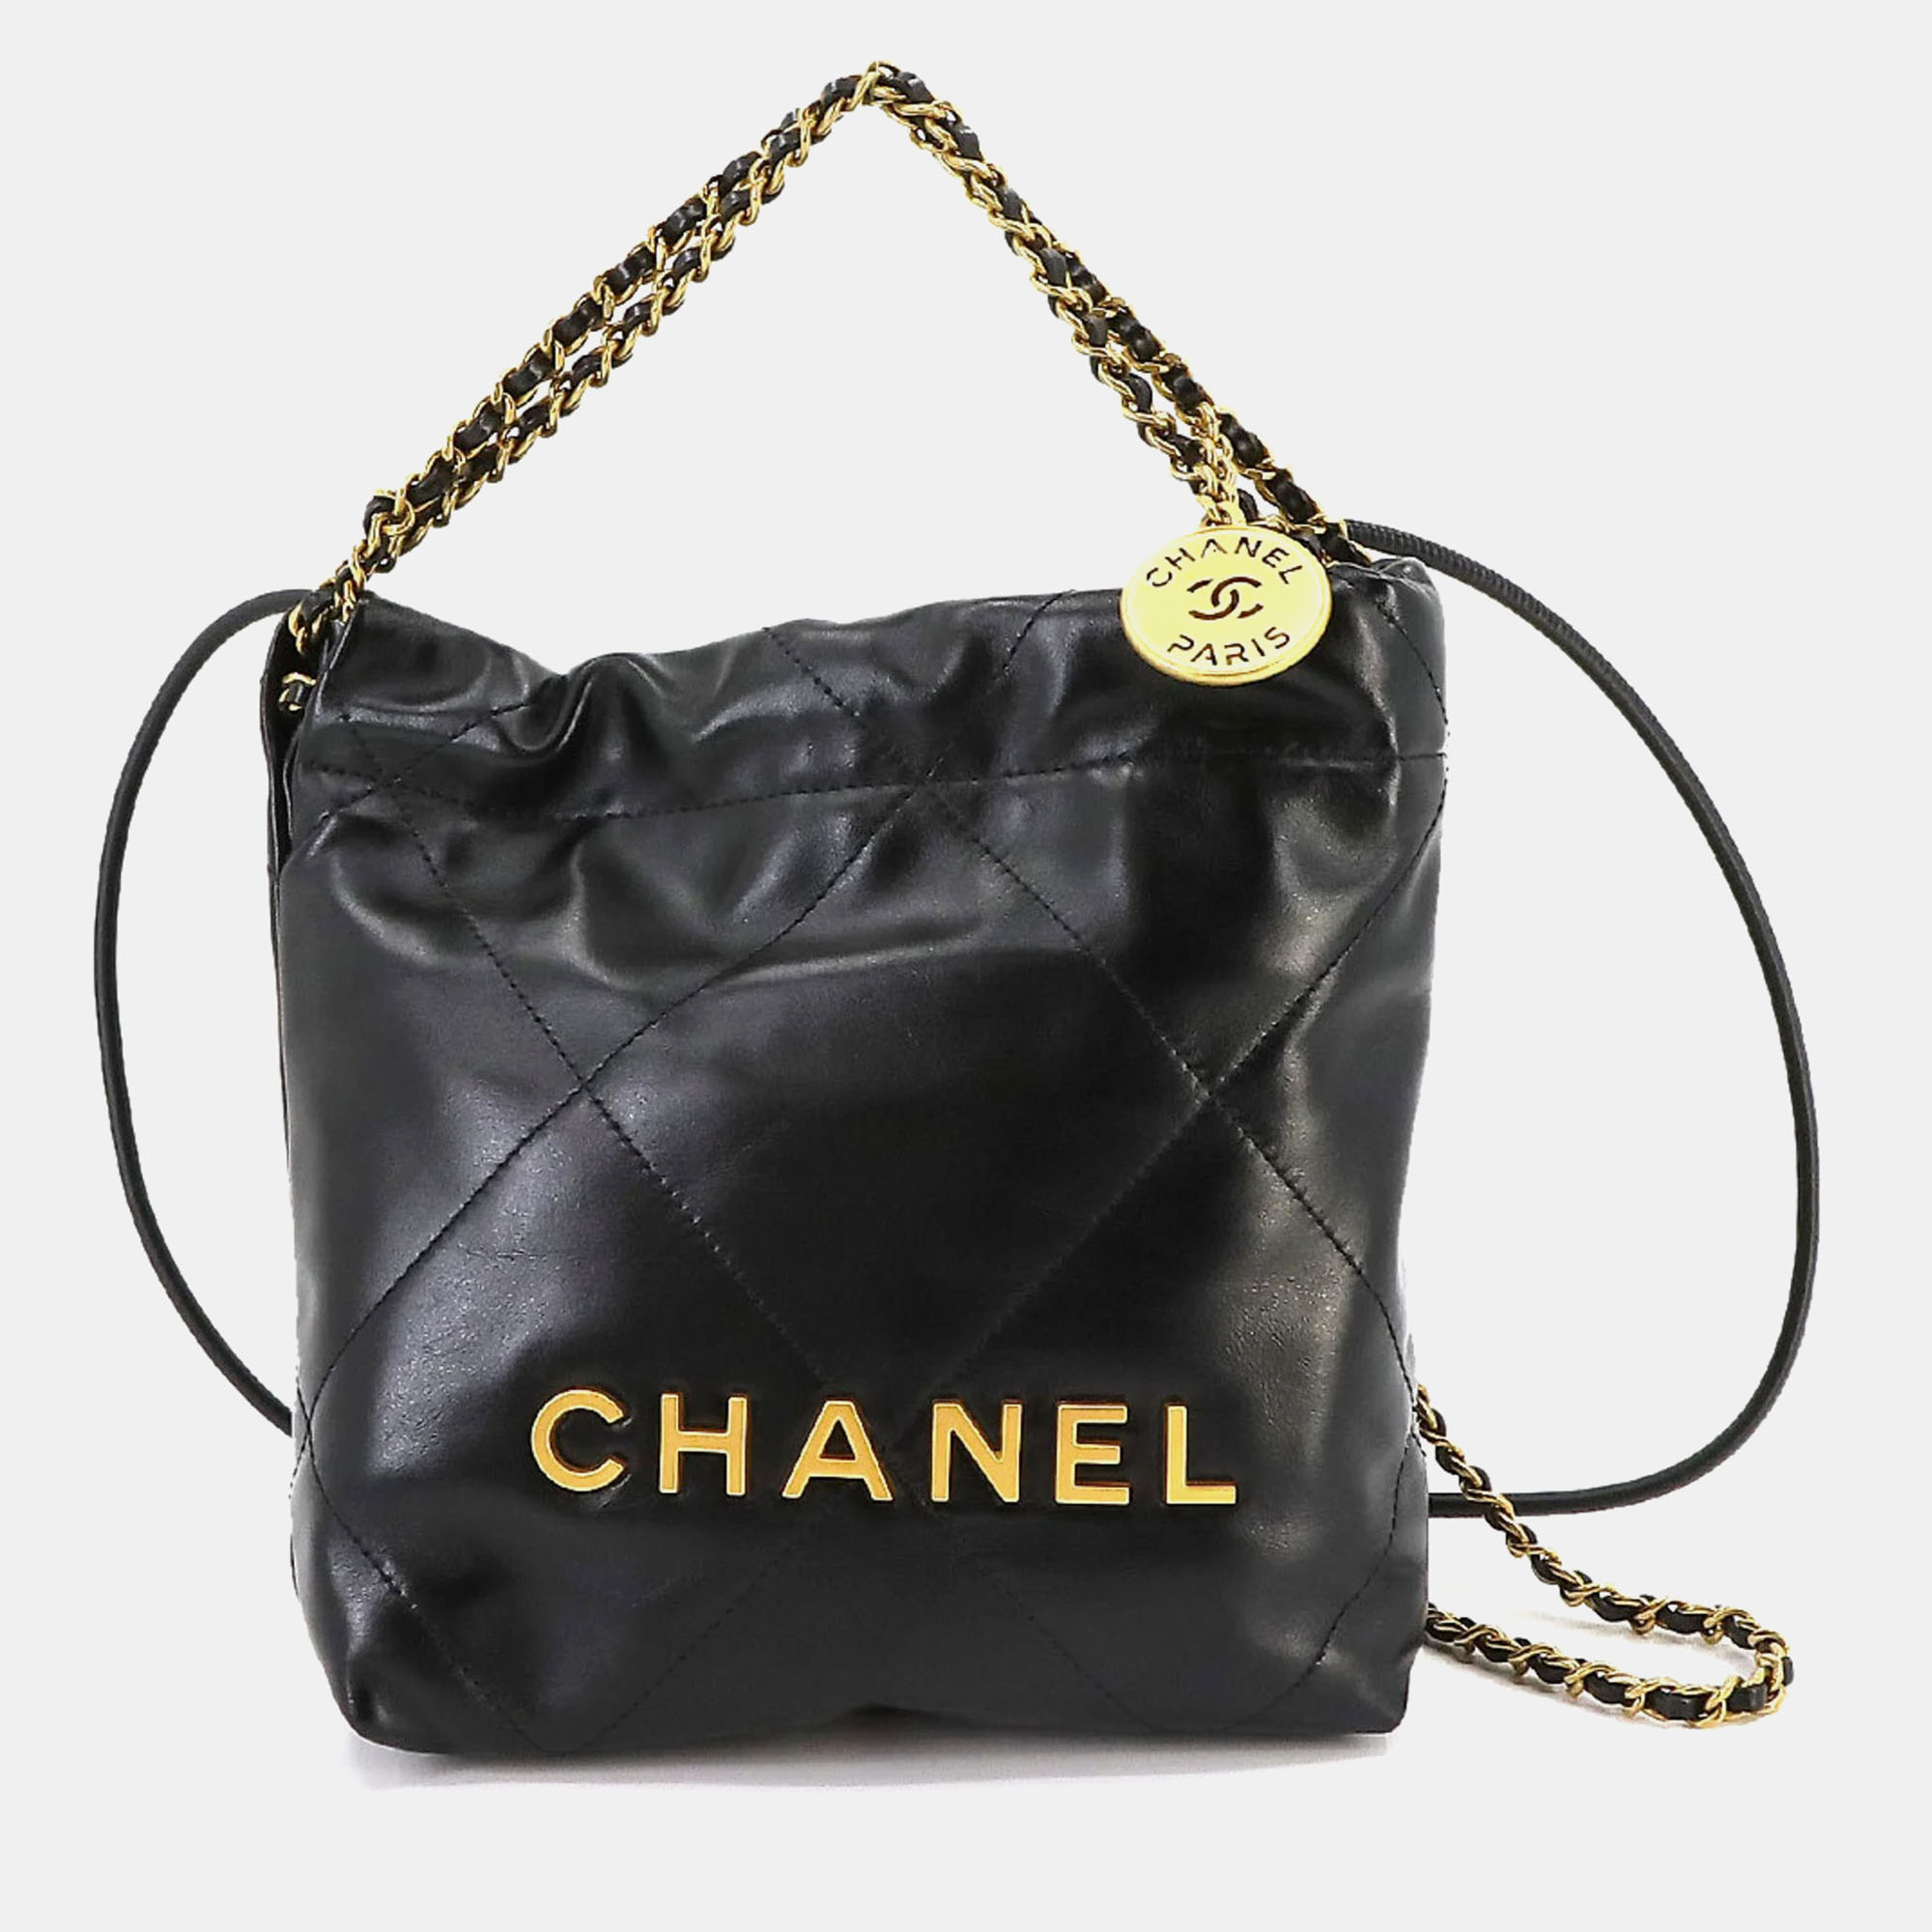 Chanel black leather mini 22 hobos